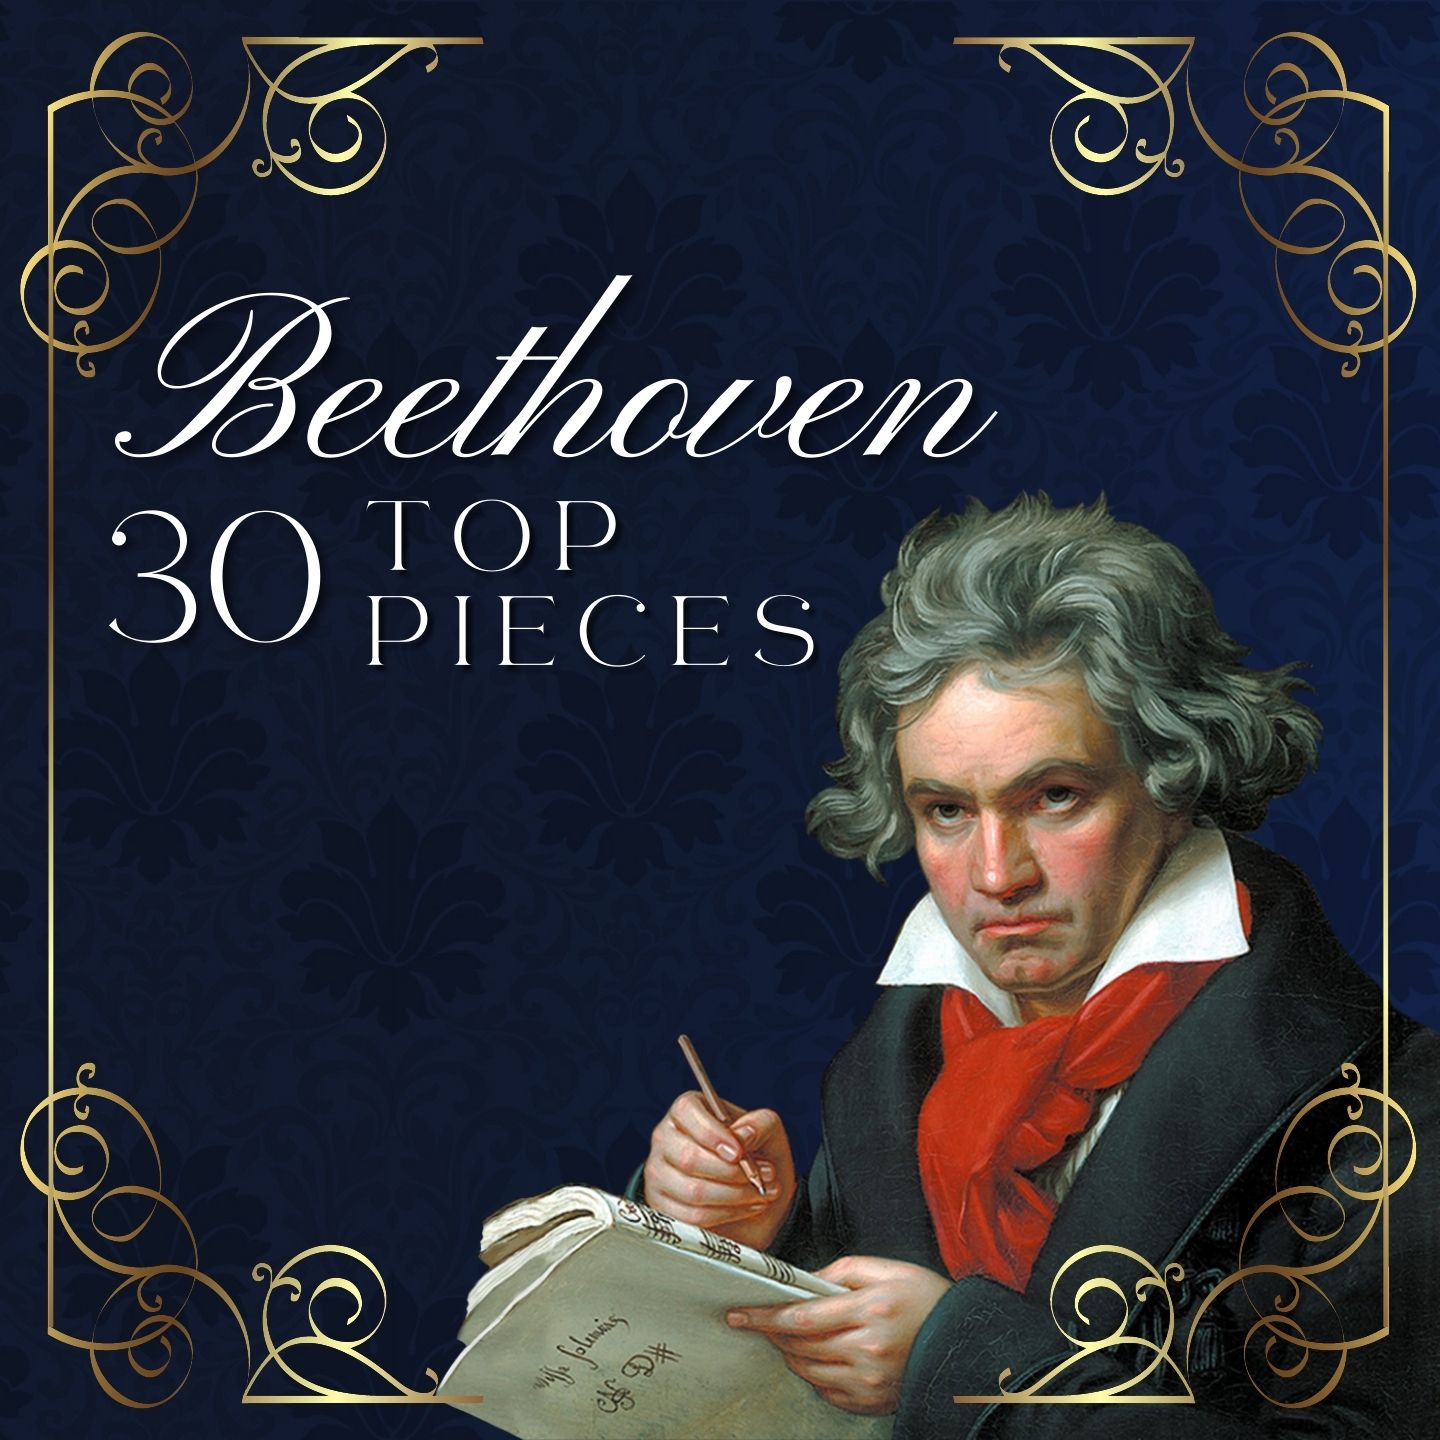 Top 30 Beethoven